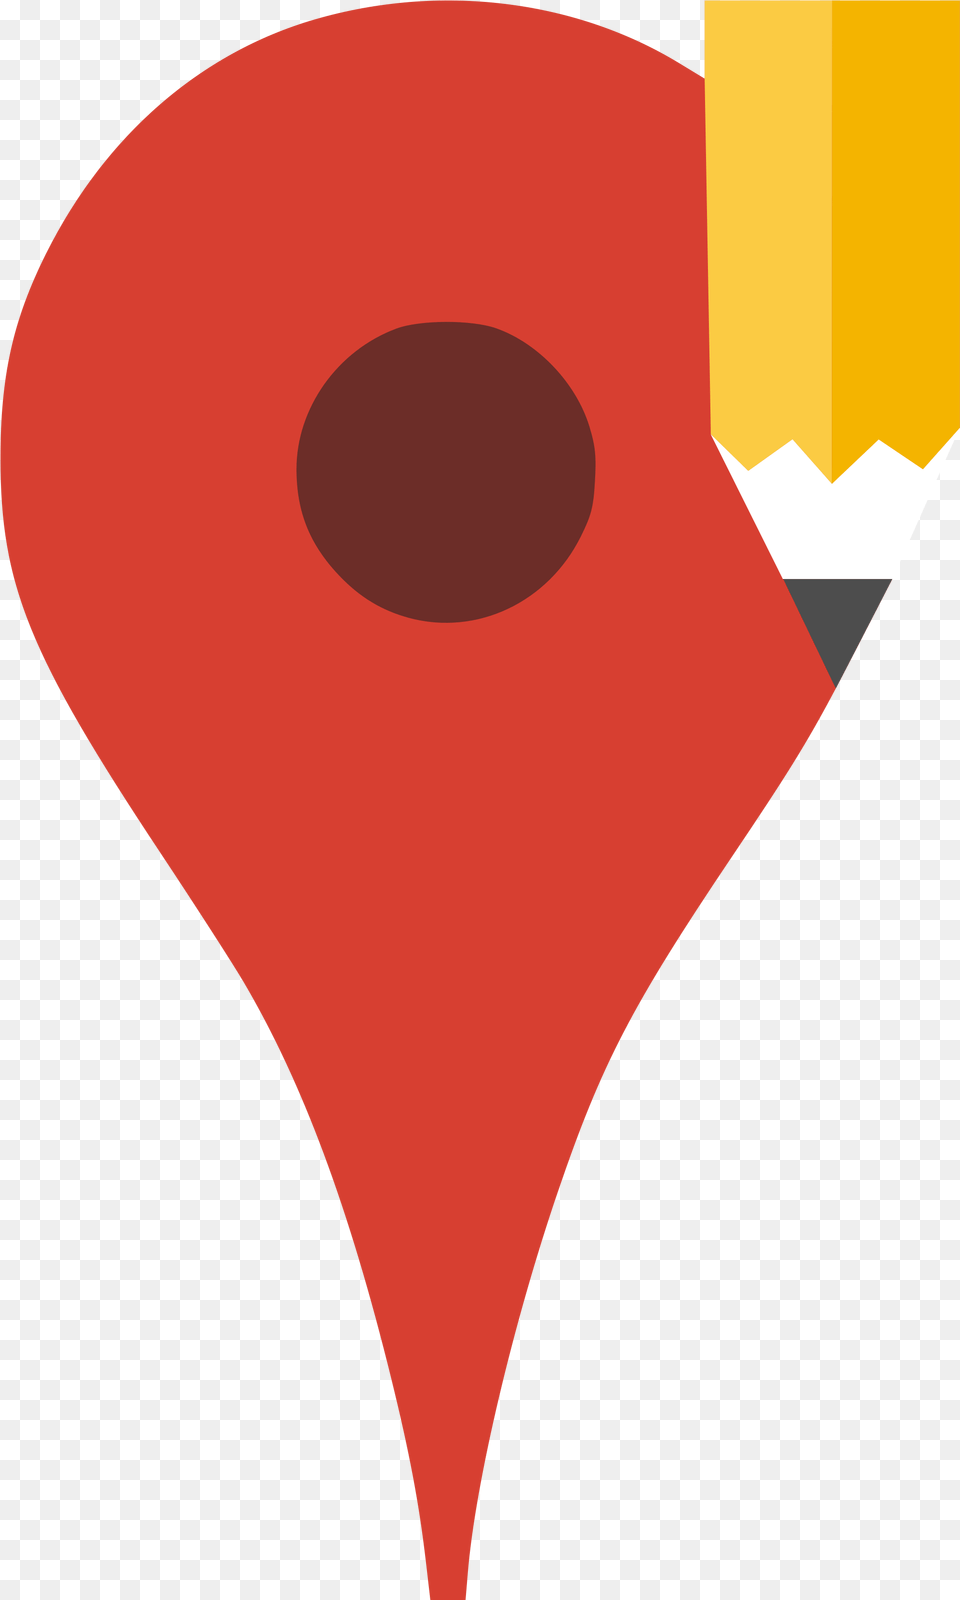 Filegoogle Map Maker Logosvg Wikimedia Commons Google Map Maker Logo, Balloon, Heart Png